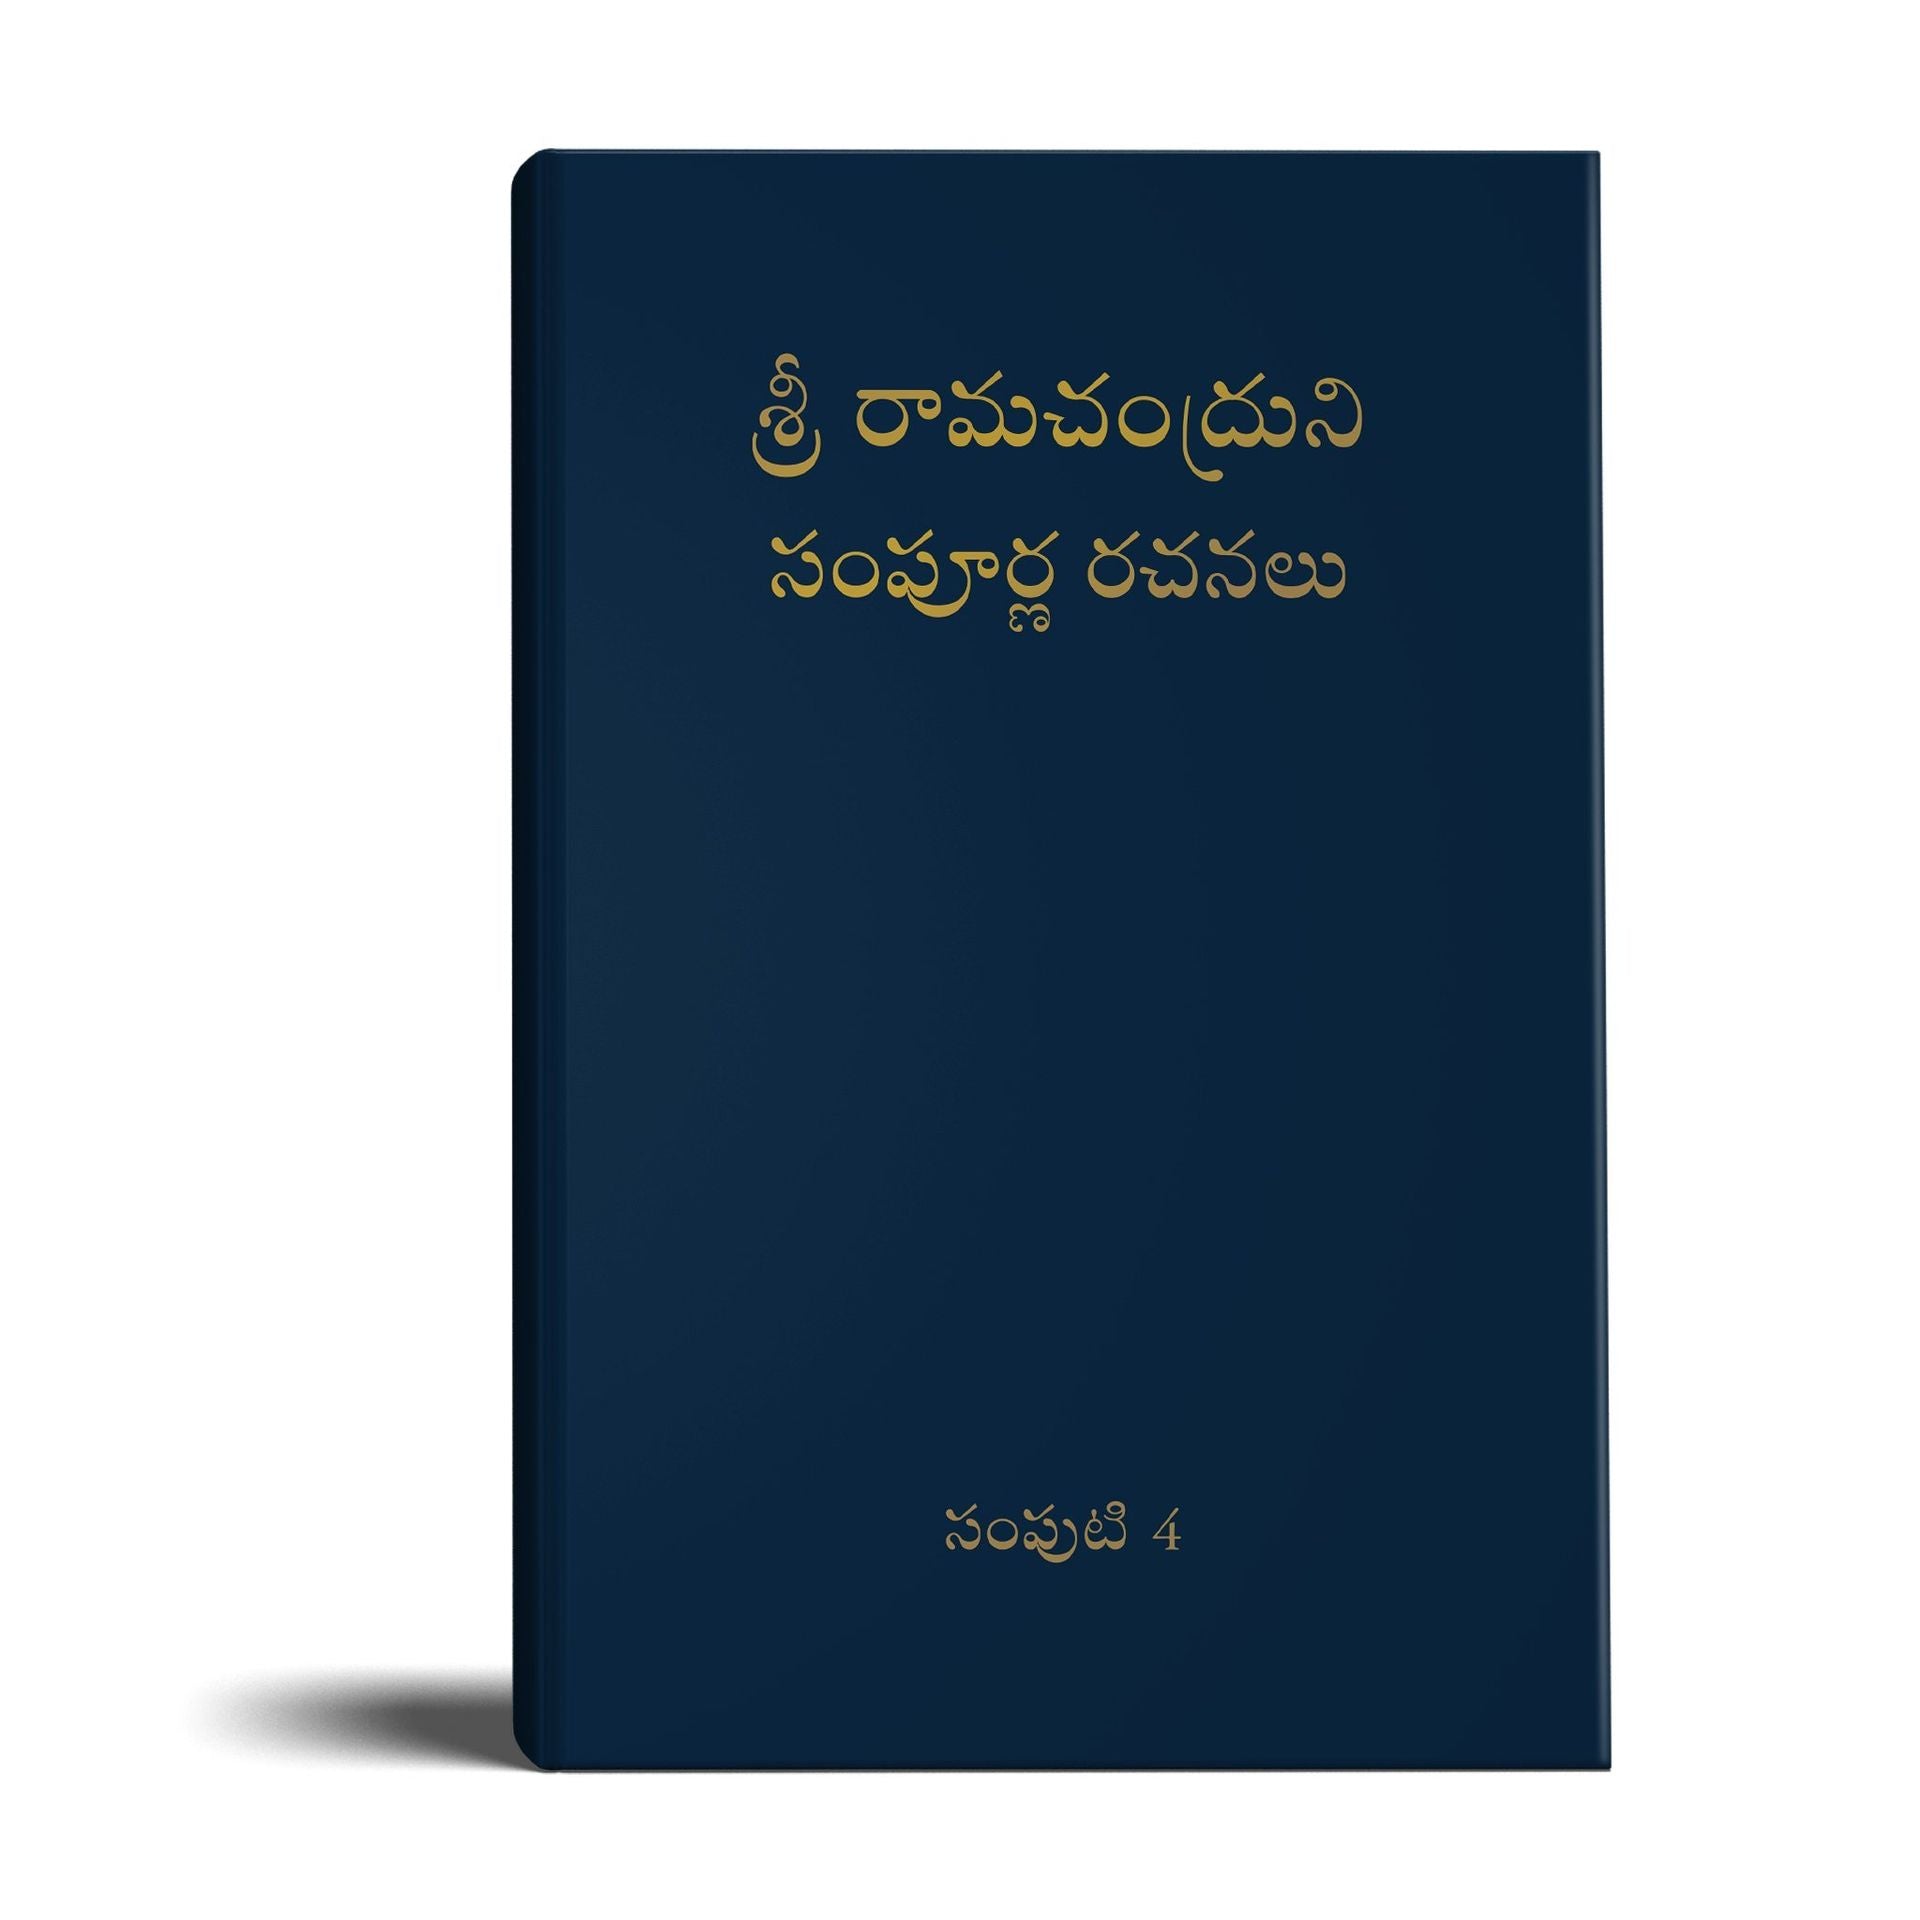 Complete Works of Ram Chandra (Babuji) - Volume 4